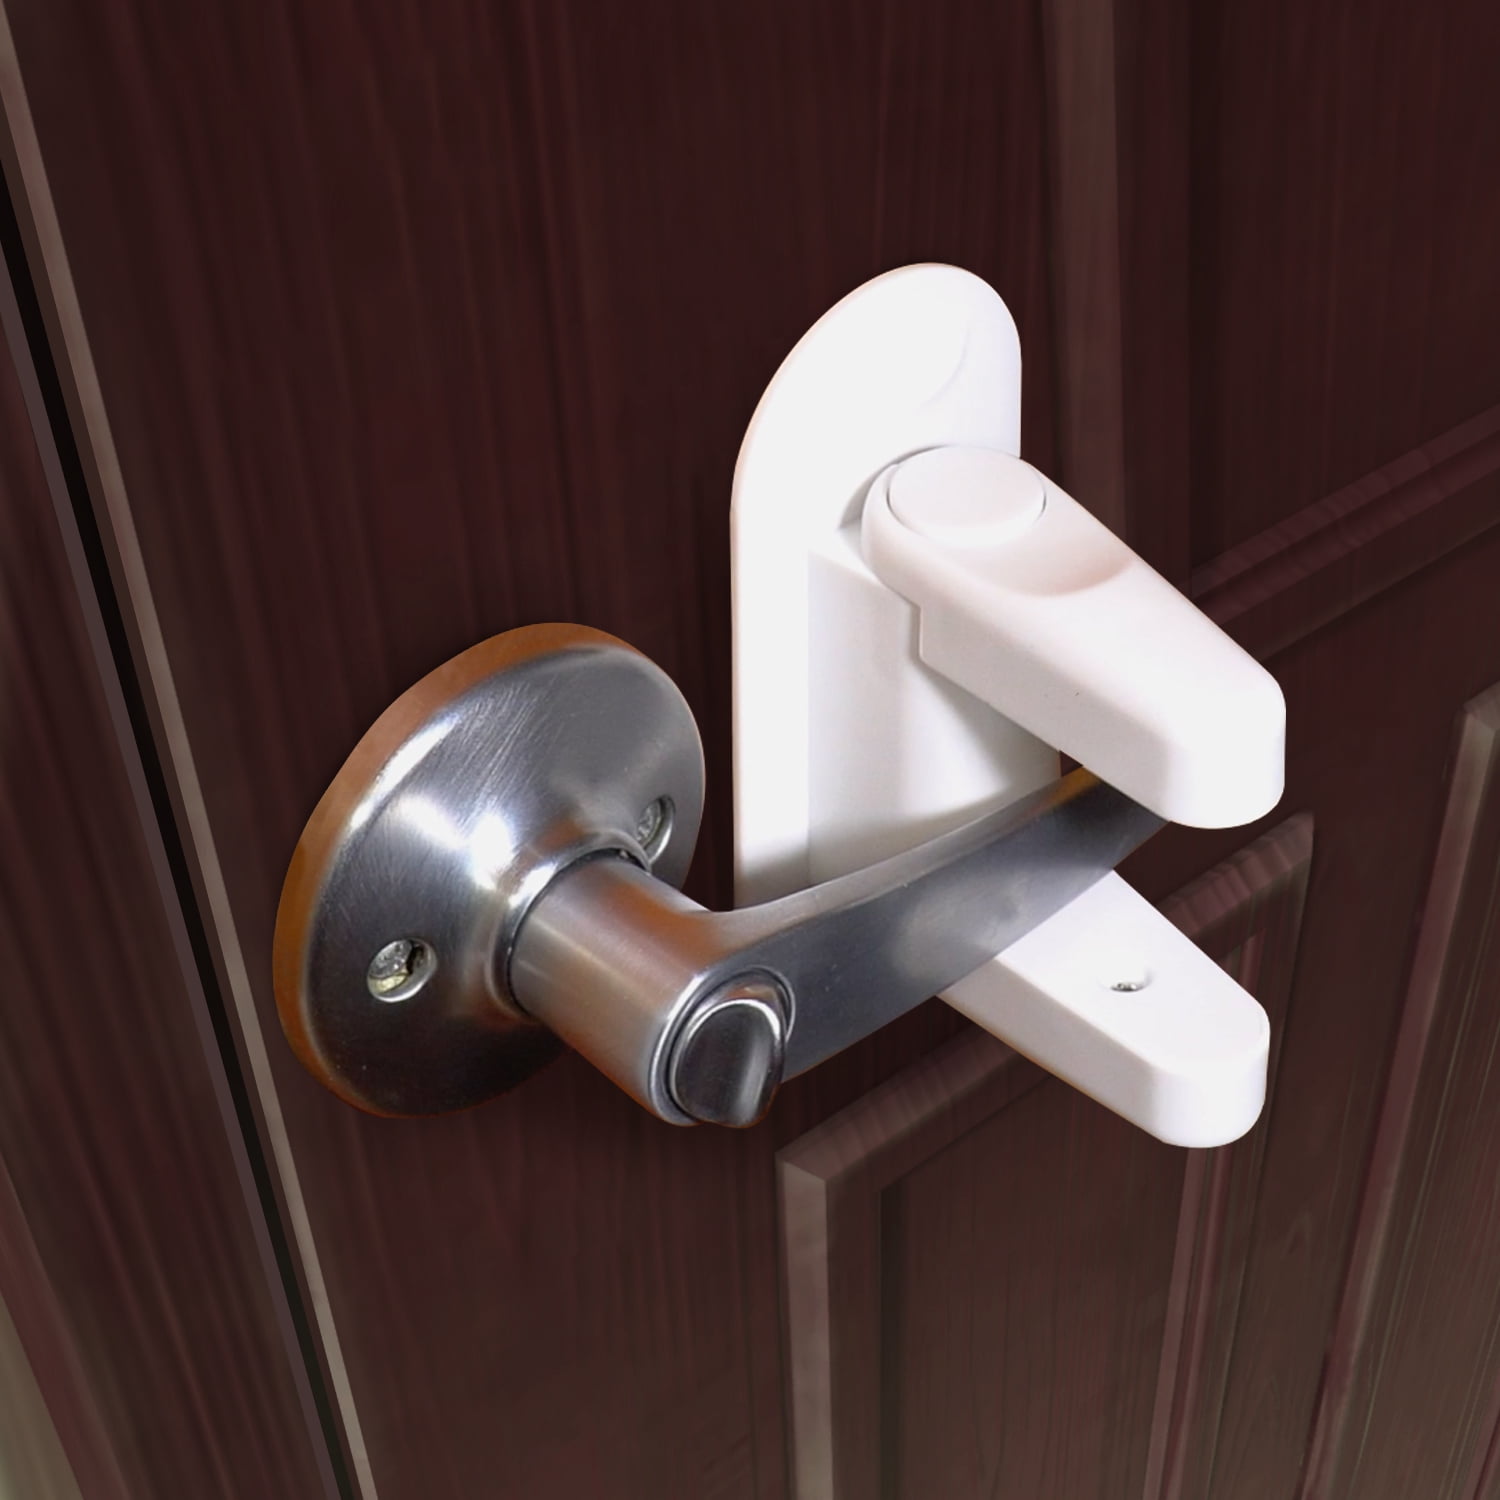 2018 Door Lever Lock Child Toddler Proof Safety Doors Handles 3M Adhesive 4 Pack 